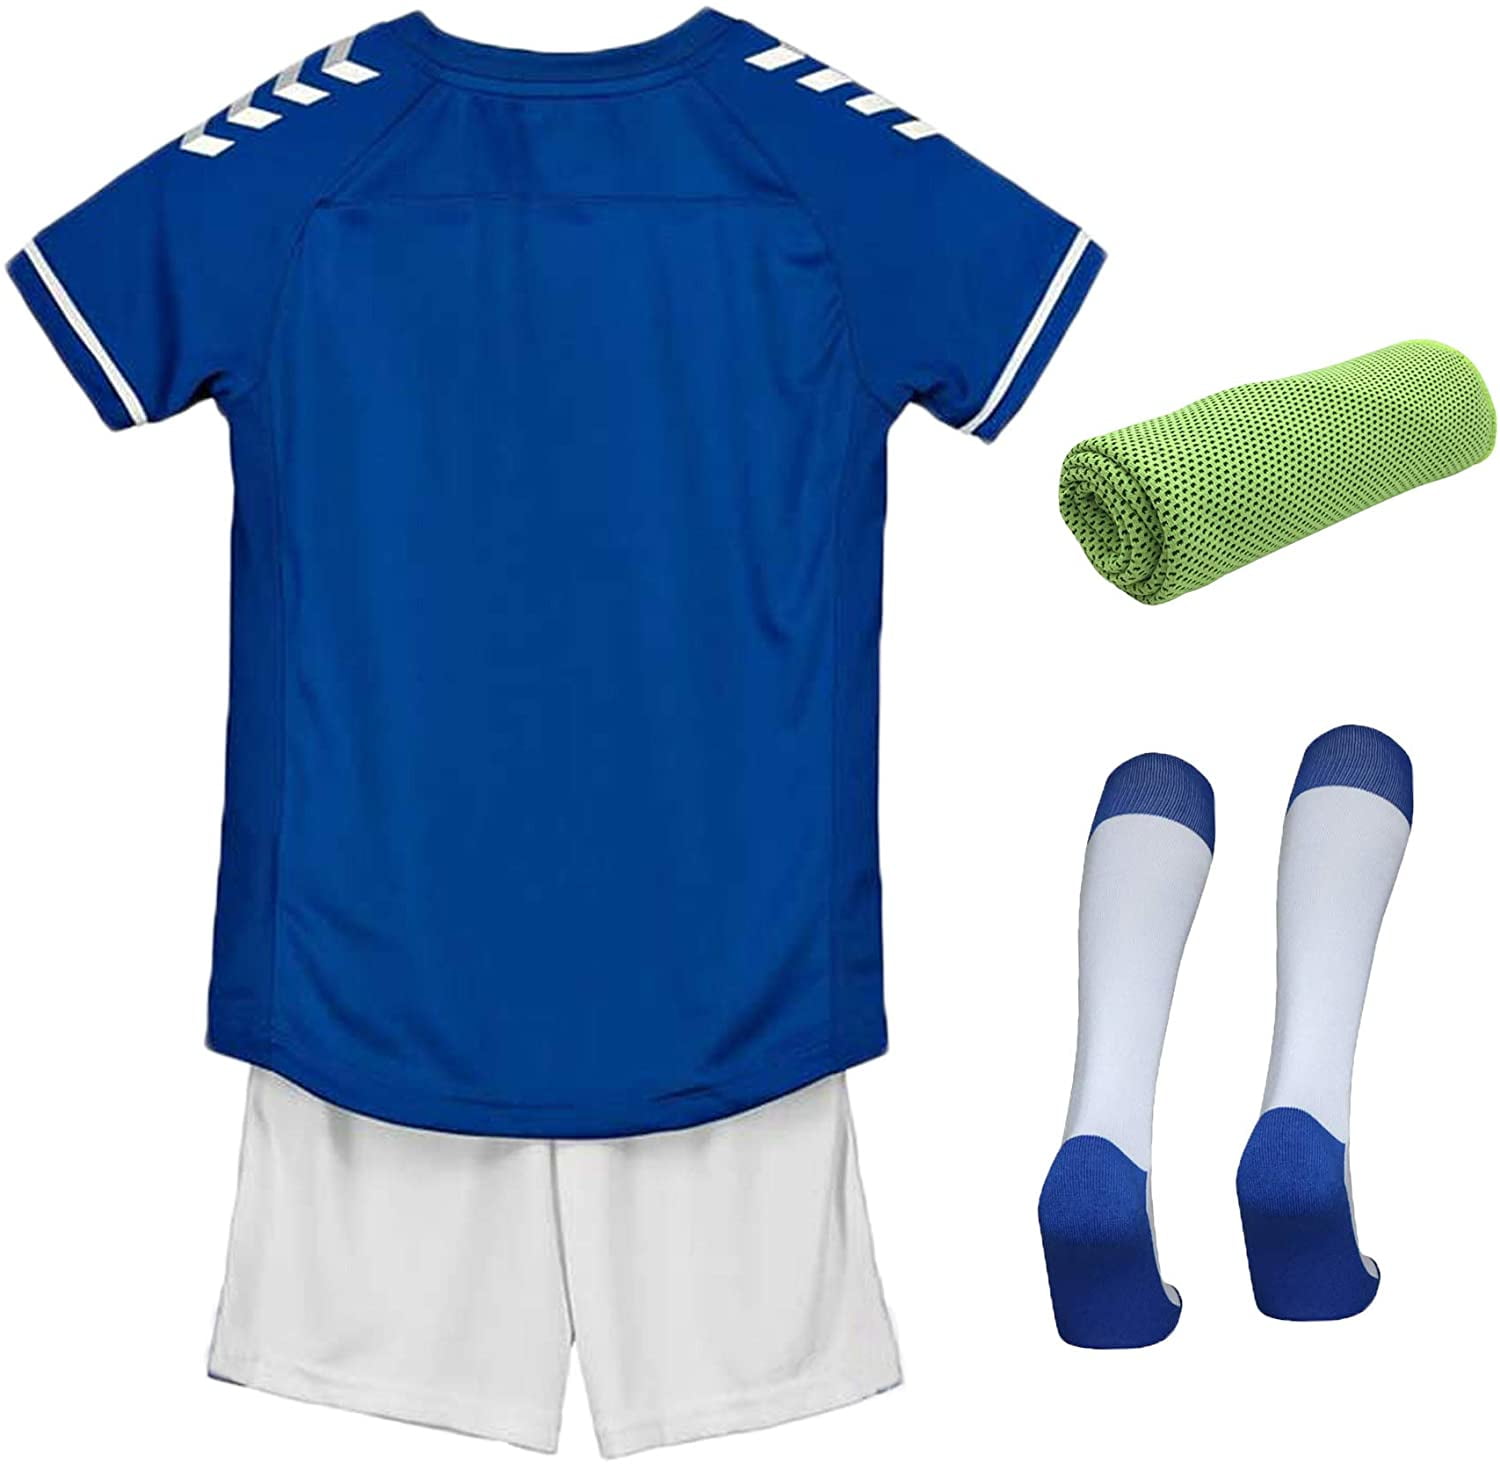 2020/2021 Kids Youth Home Kit Short Sleeve Soccer Jersey White & Striped Shorts,Socks,Towel,4in1 Gift Set,#7 Ronaldo #10 Dybala 